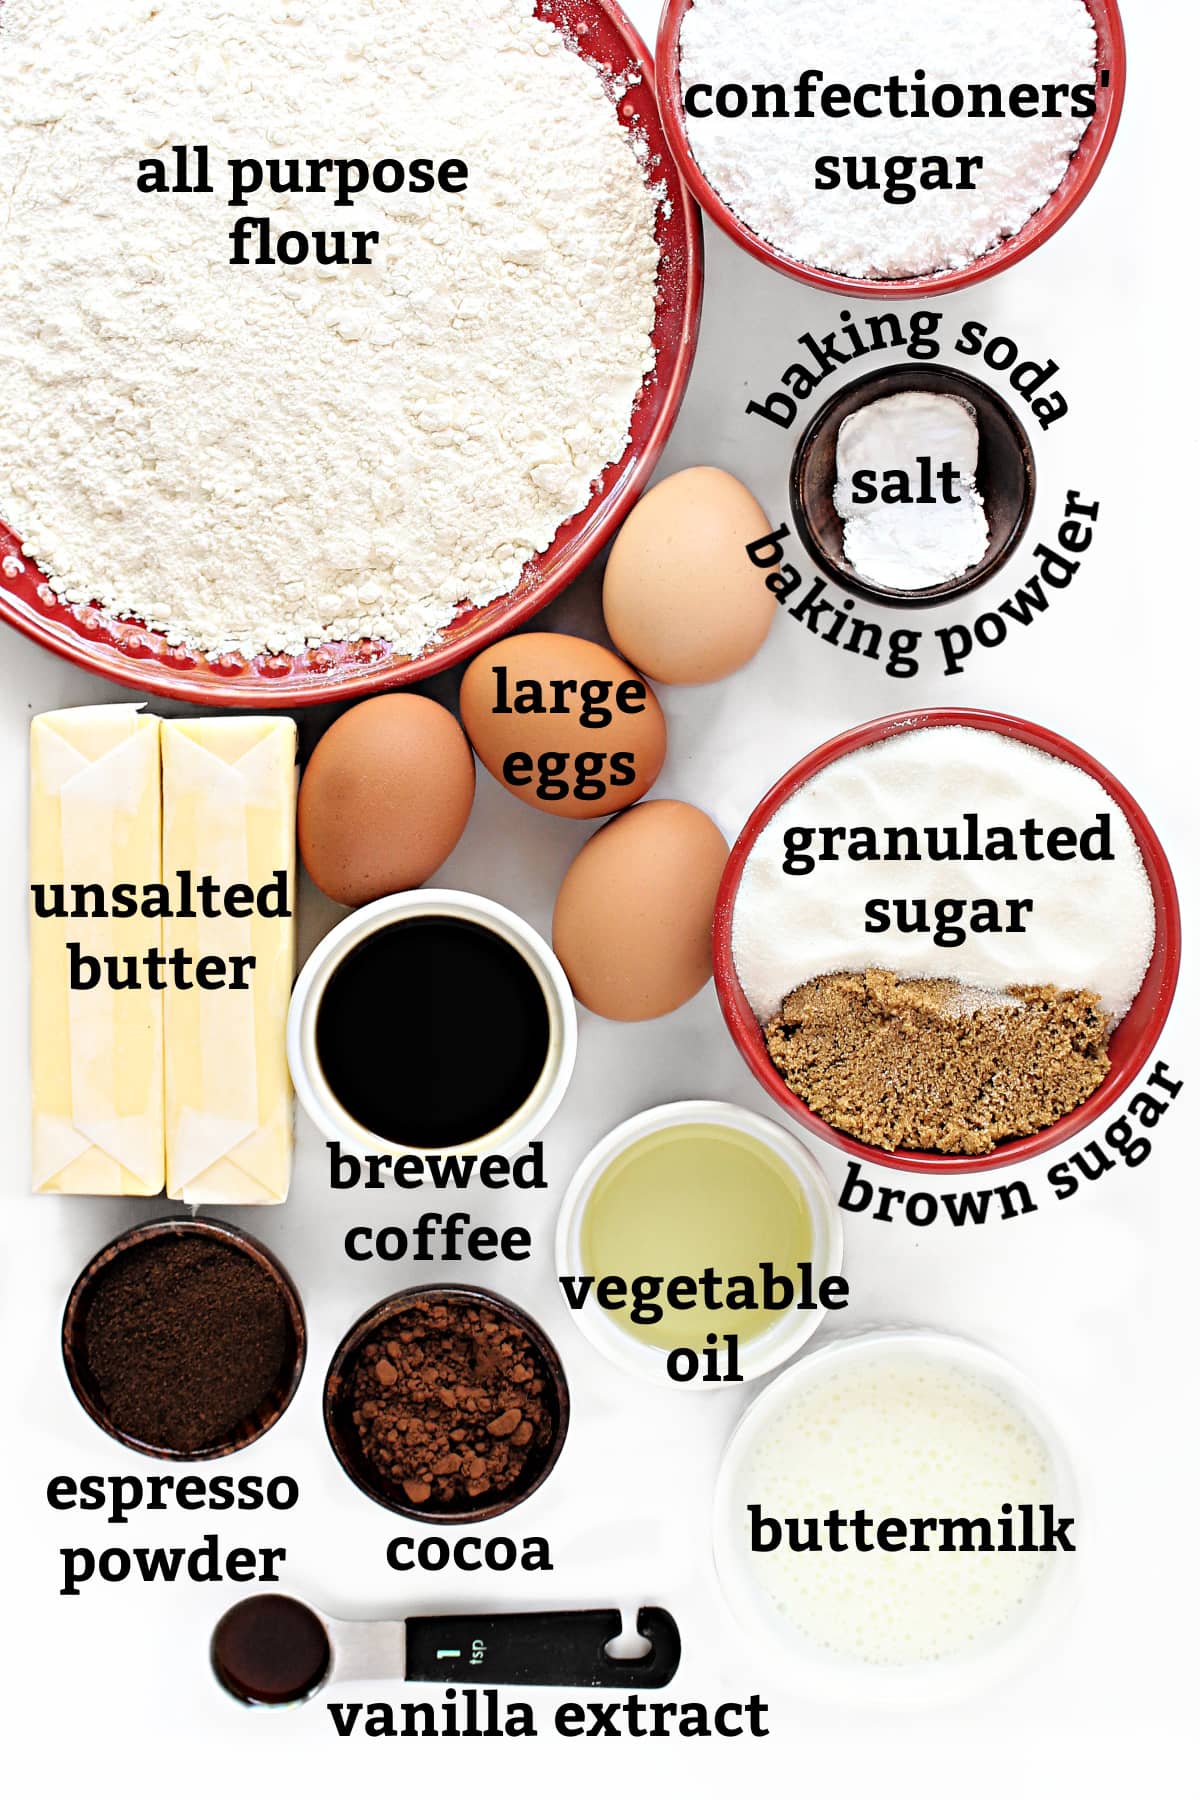 Ingredients: flour,butter, coffee, espresso powder, cocoa, buttermilk, vanilla, sugars, baking powder/soda, salt, powdered sugar.